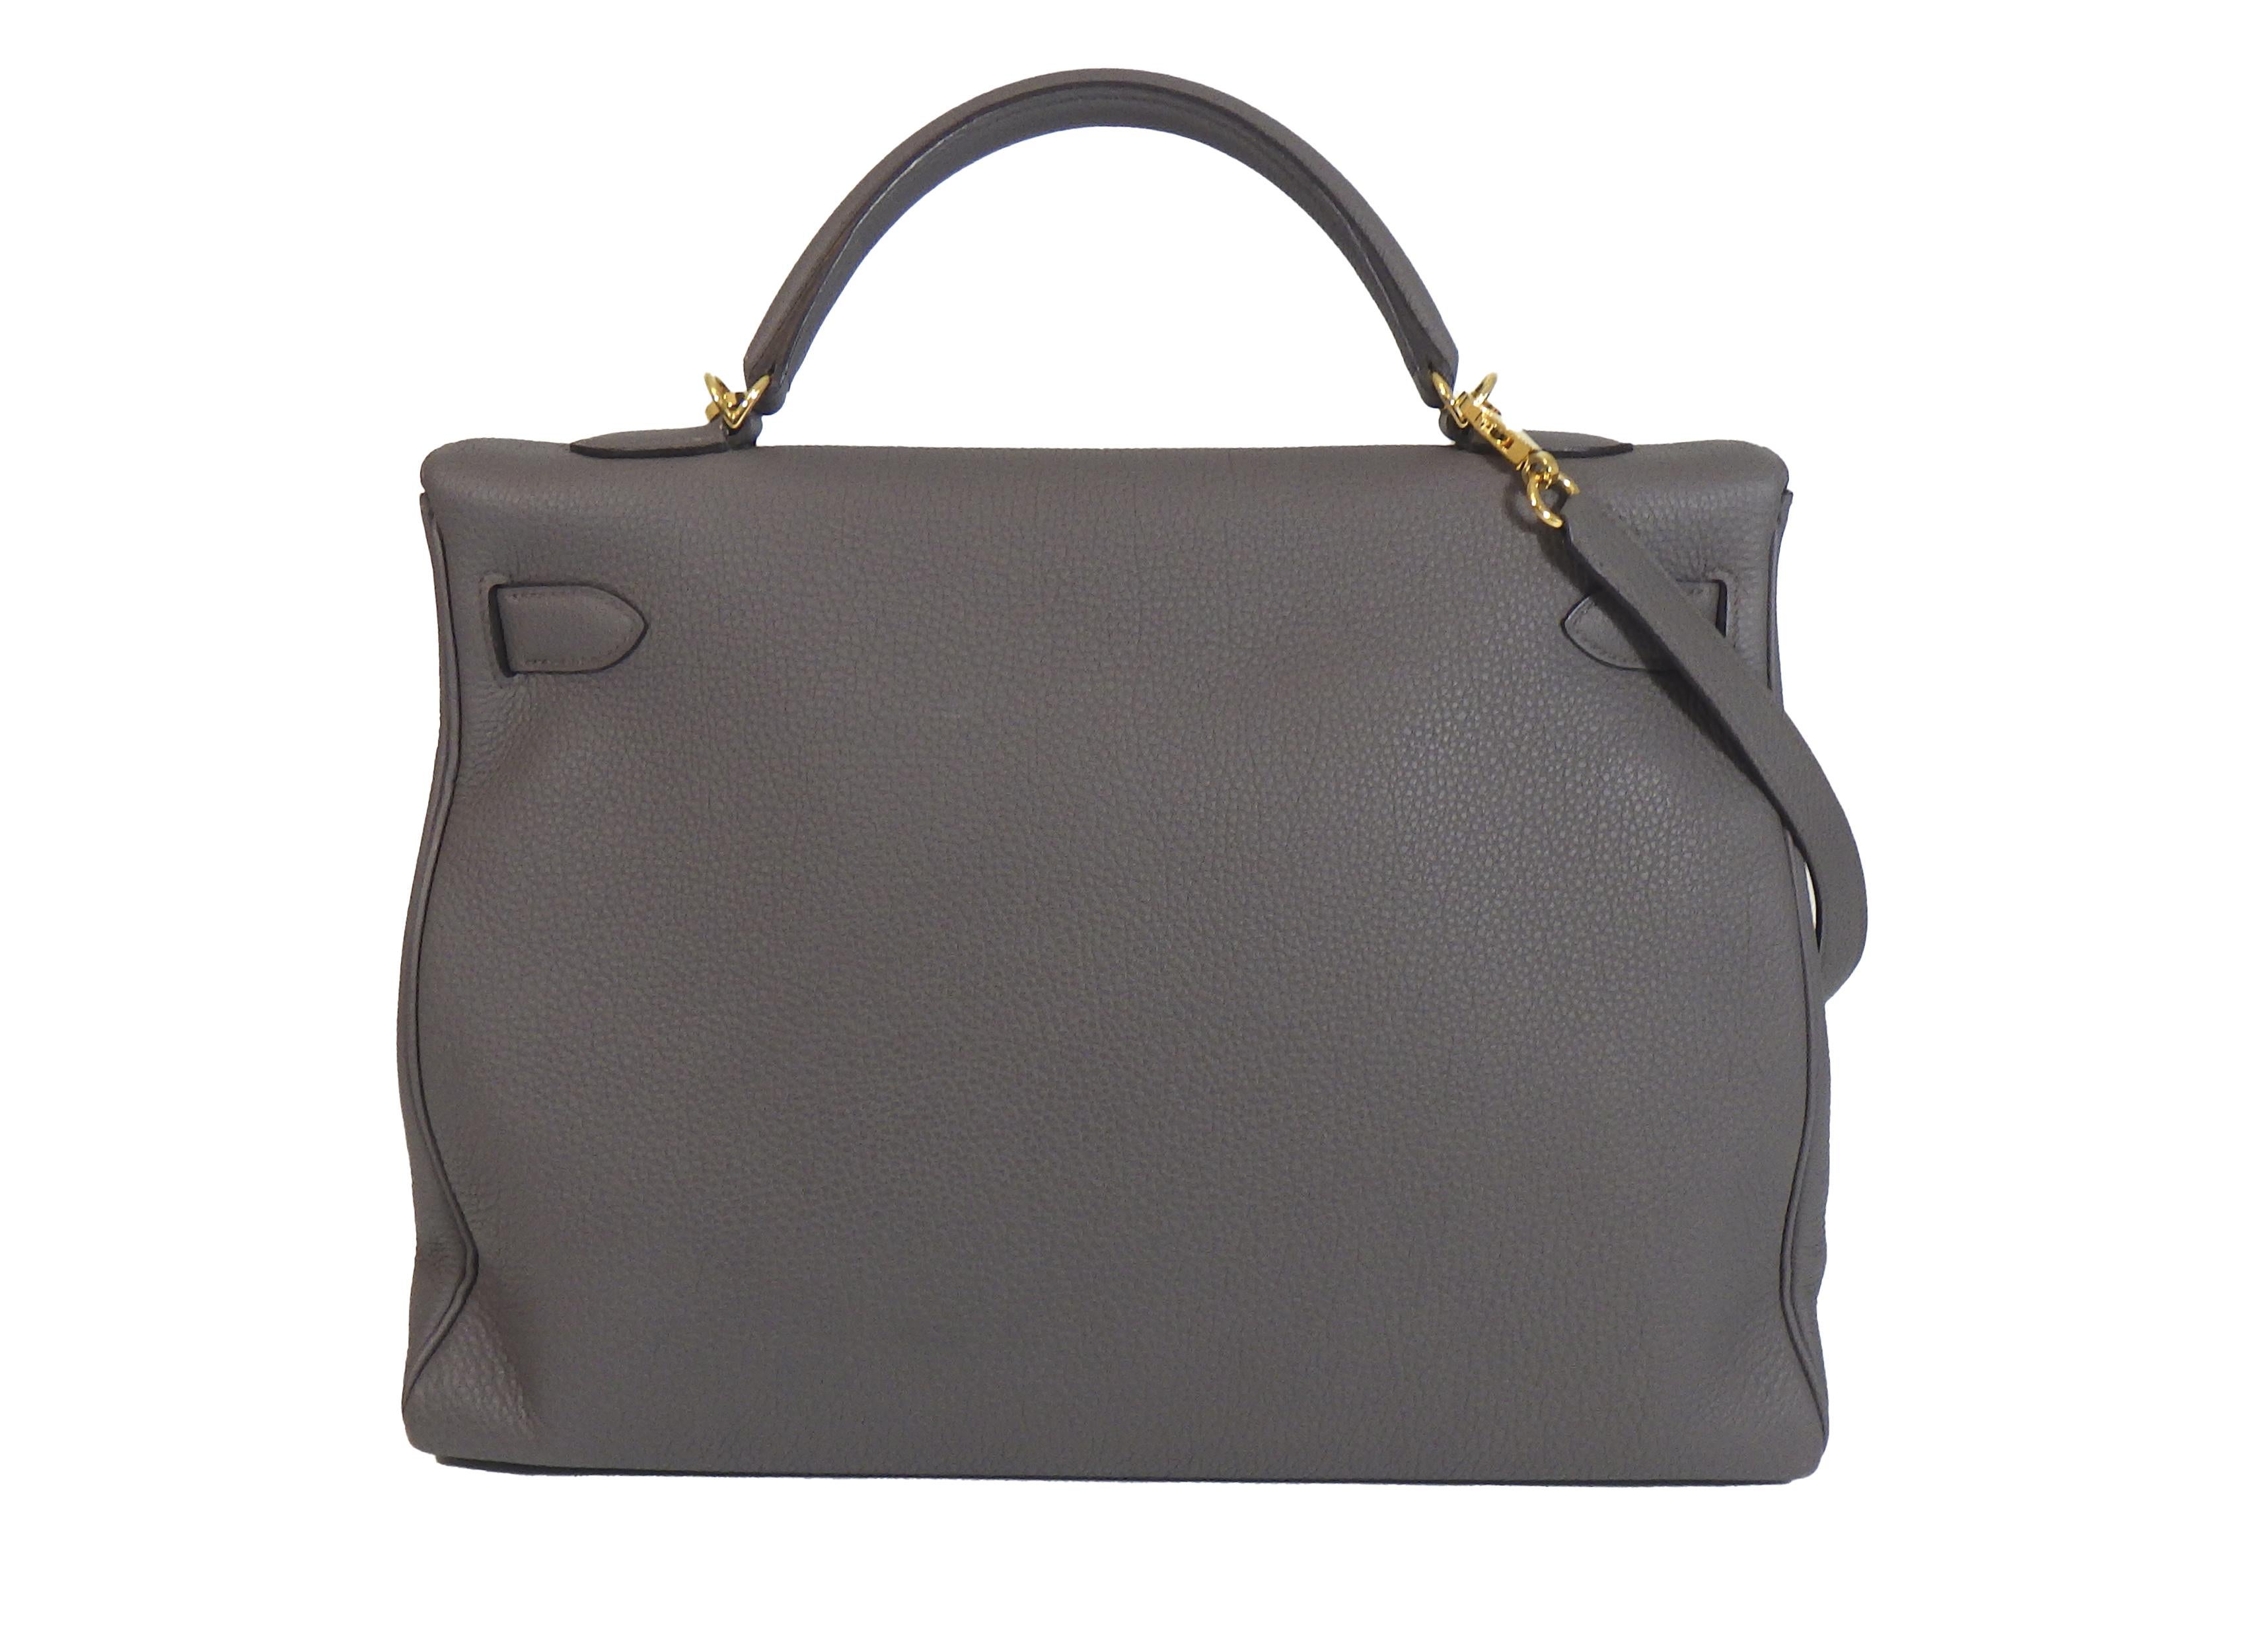 Hermes - Excellent - Kelly 40 2017 - Etain - Handbag

Description

Hermès Top Handle Bag
Rolled Handles & Single Shoulder Strap
Turn-Lock Closure at Front

Measurements

Width: 14.7 in / 37.338 cm
Height: 11 in / 27.94 cm
Depth: 5.9 in / 14.986